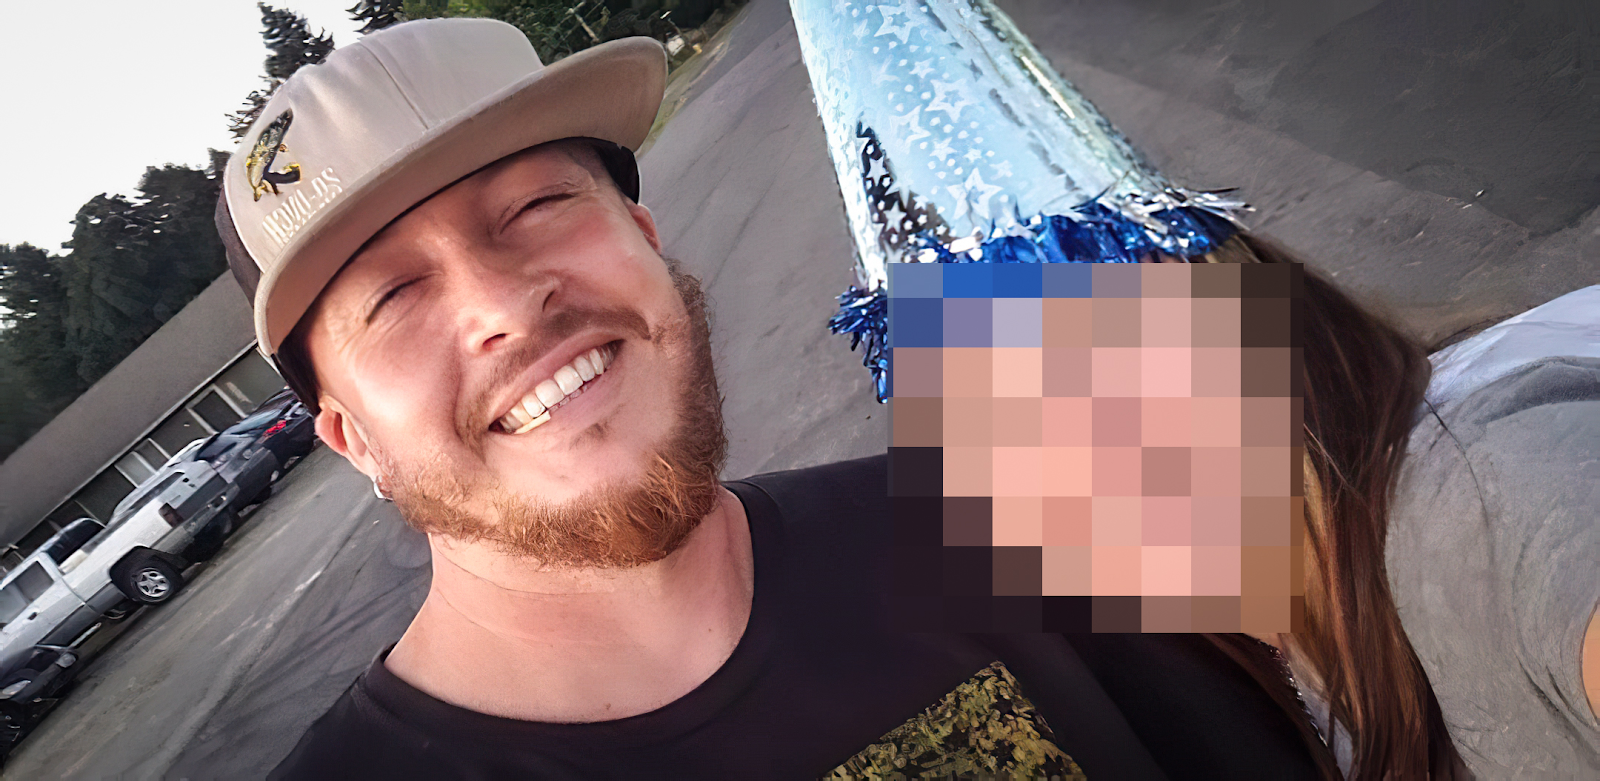 Aaron "Jay" Danielson was shot dead in downtown Portland by an alleged Antifa militant